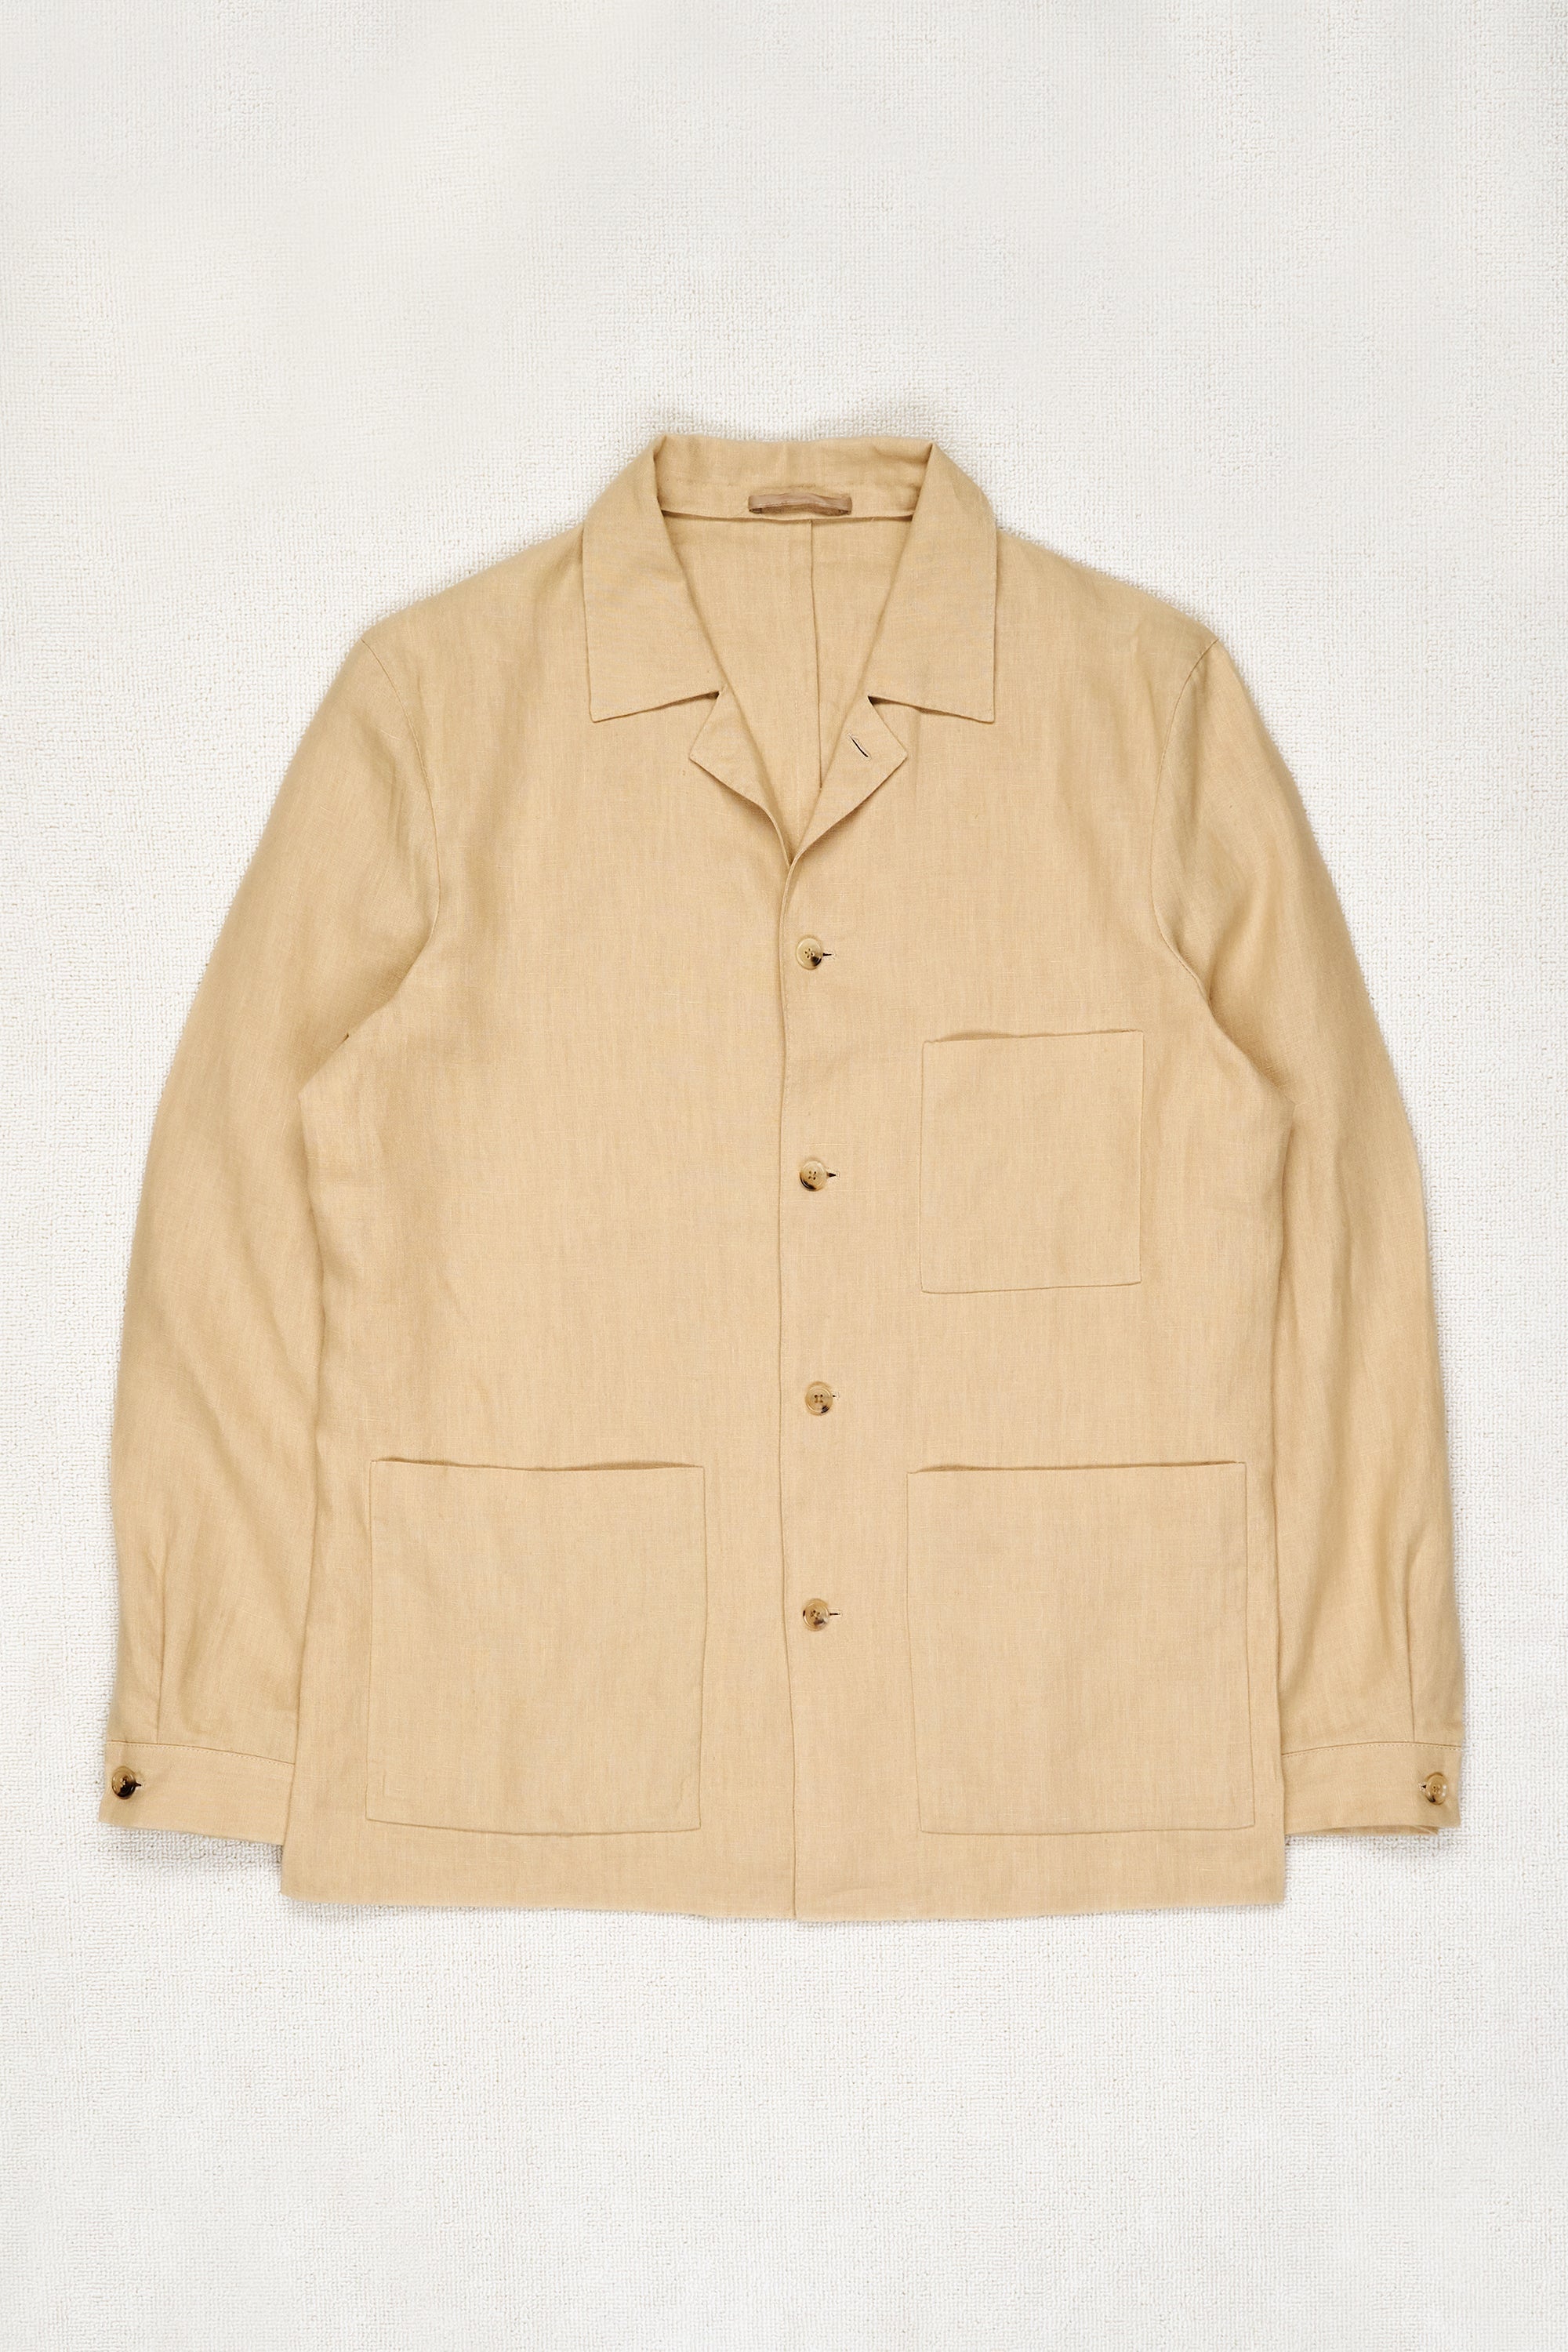 P. Johnson Caramel Linen Shirt Jacket